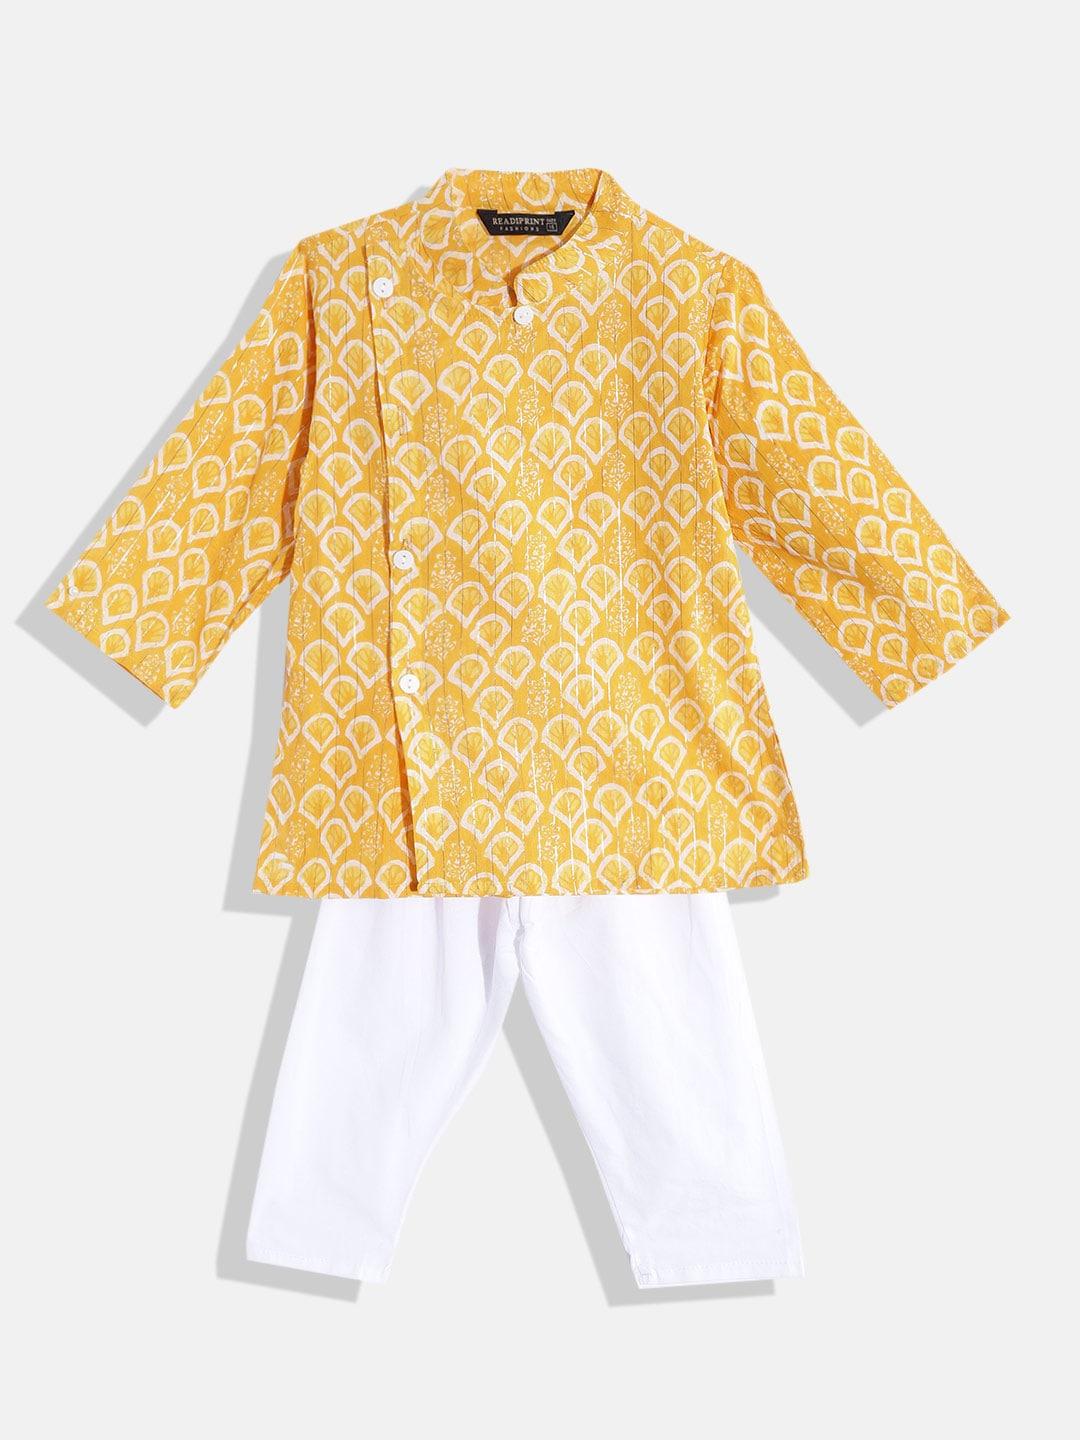 Readiprint Fashions Boys Yellow Ethnic Motifs Printed Pure Cotton Kurta with Pyjamas